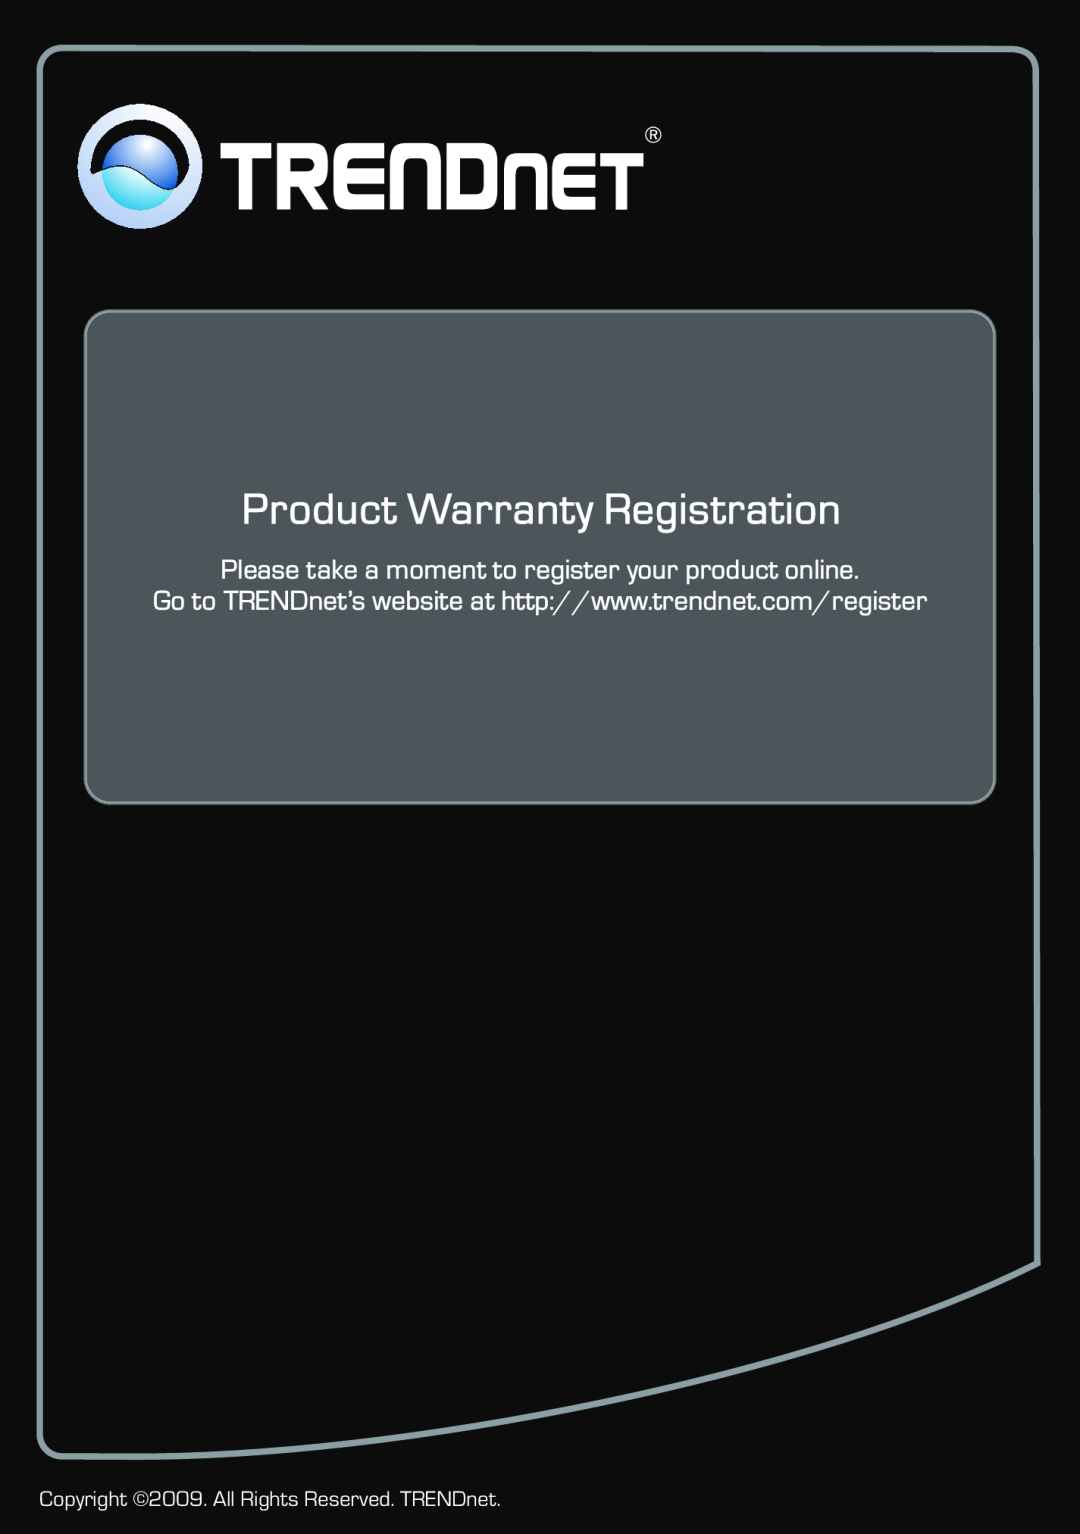 TRENDnet TK-802R, TRENDNET manual Product Warranty Registration, Copyright 2009. All Rights Reserved. TRENDnet 